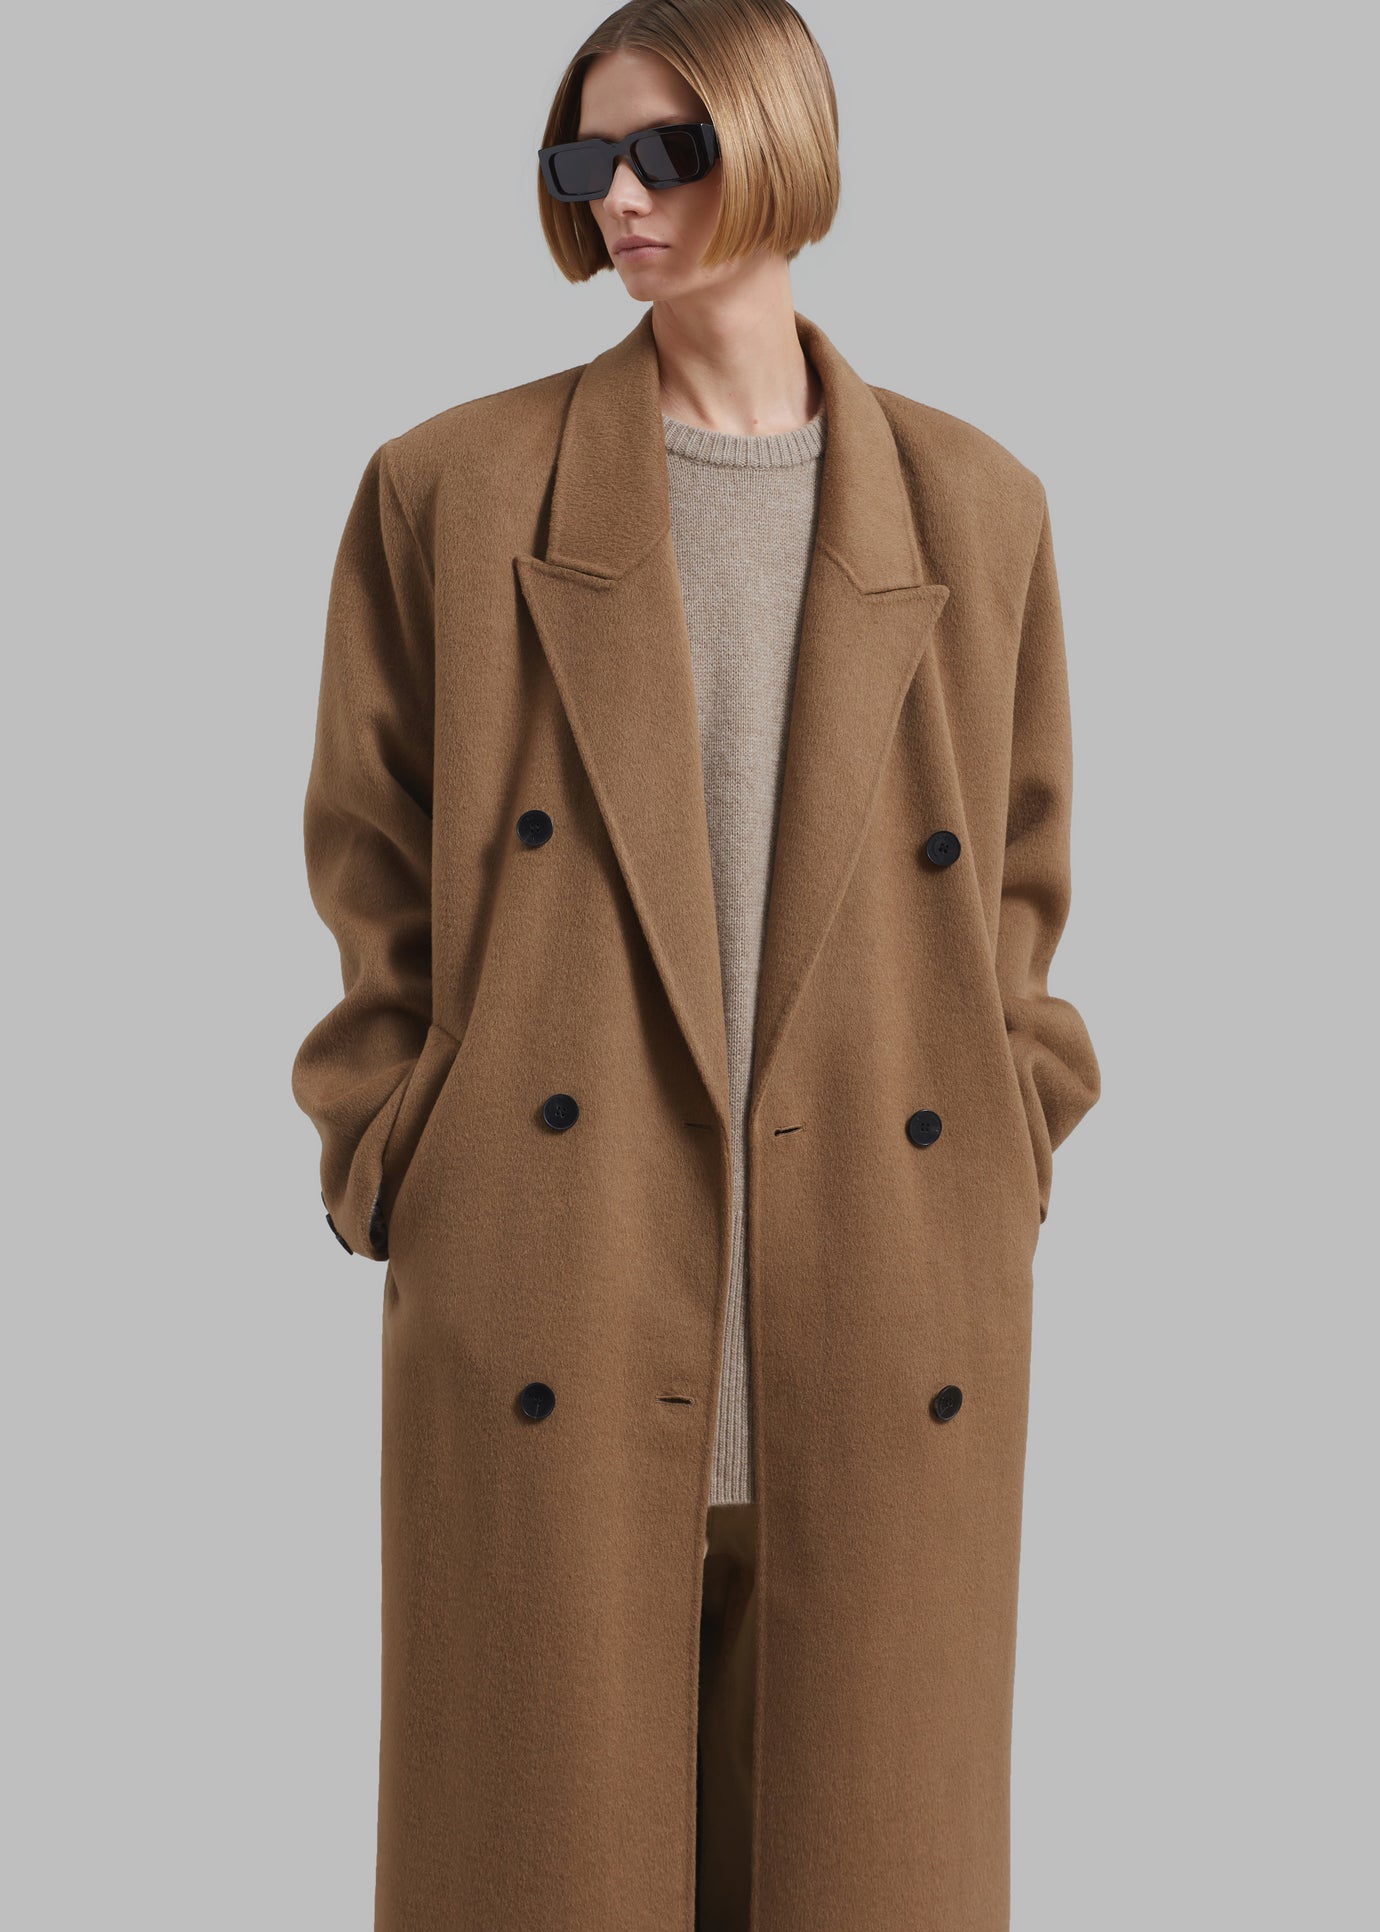 Women's Coats, Jackets, Trench & Blazer – Page 6 – The Frankie Shop